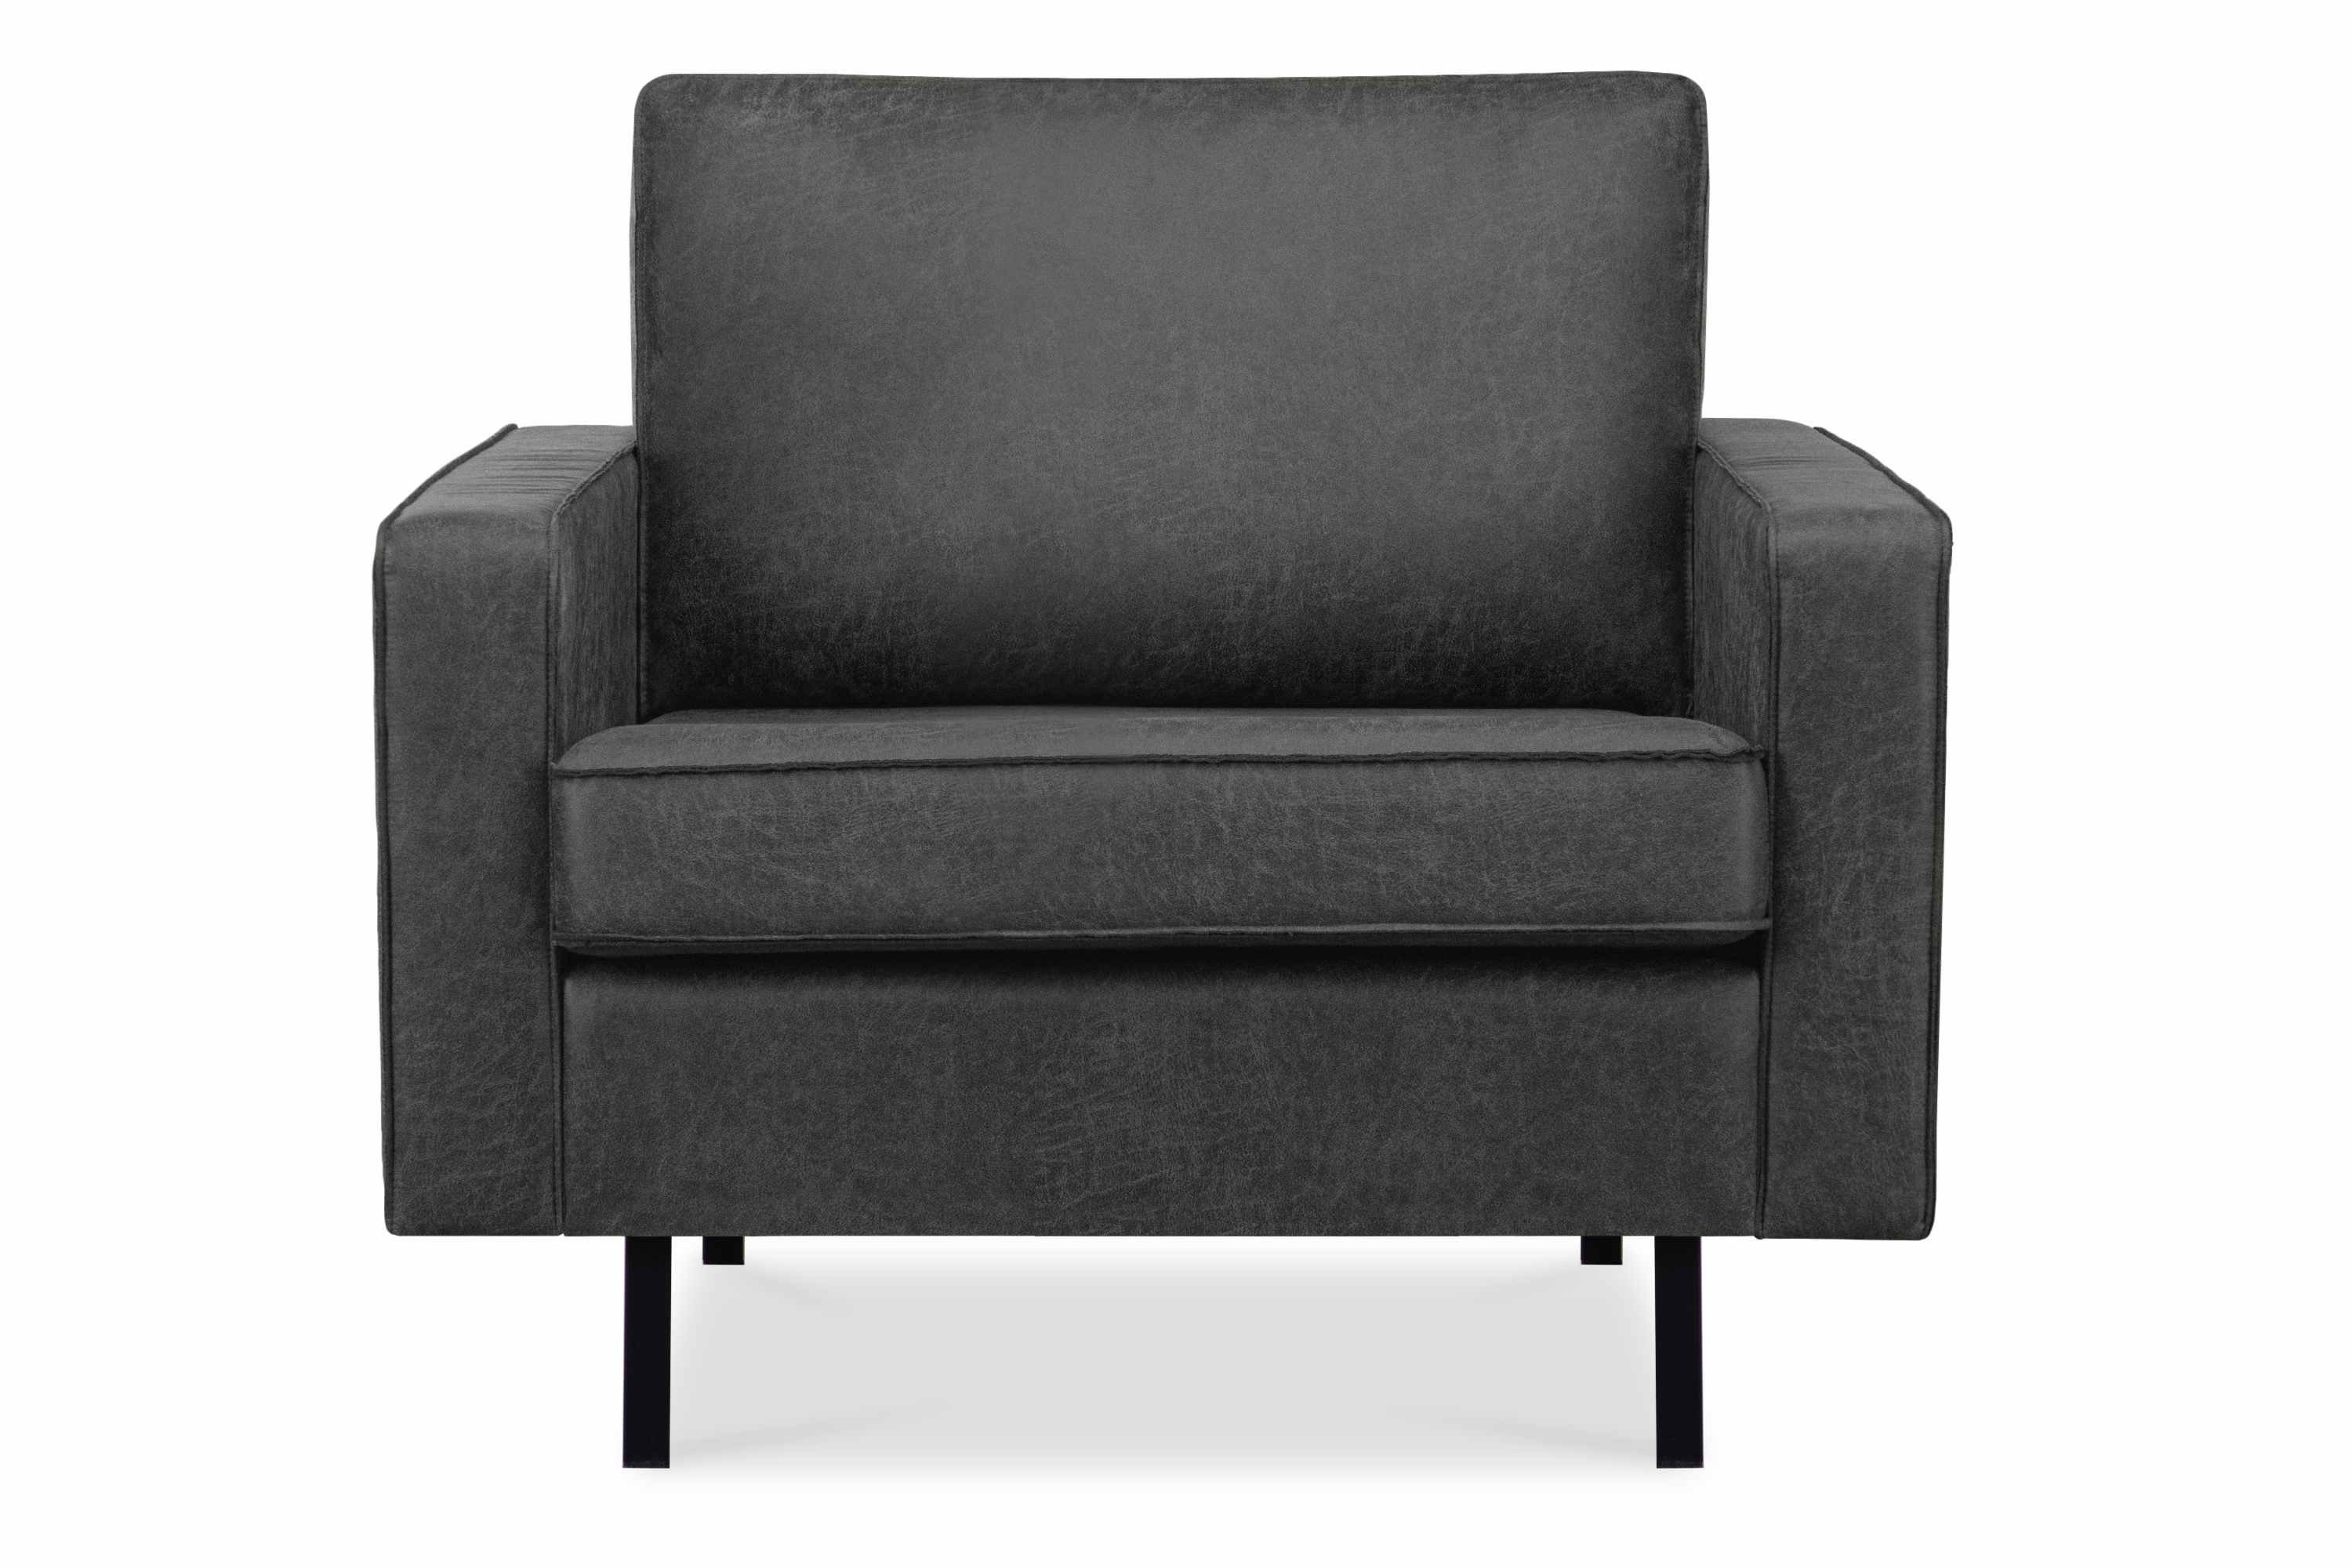 Konsimo Sessel INVIA Sessel, Grundschicht: Echtleder, Hergestellt in EU, Vintage, Loft-Stil dunkelgrau | dunkelgrau | dunkelgrau | Einzelsessel